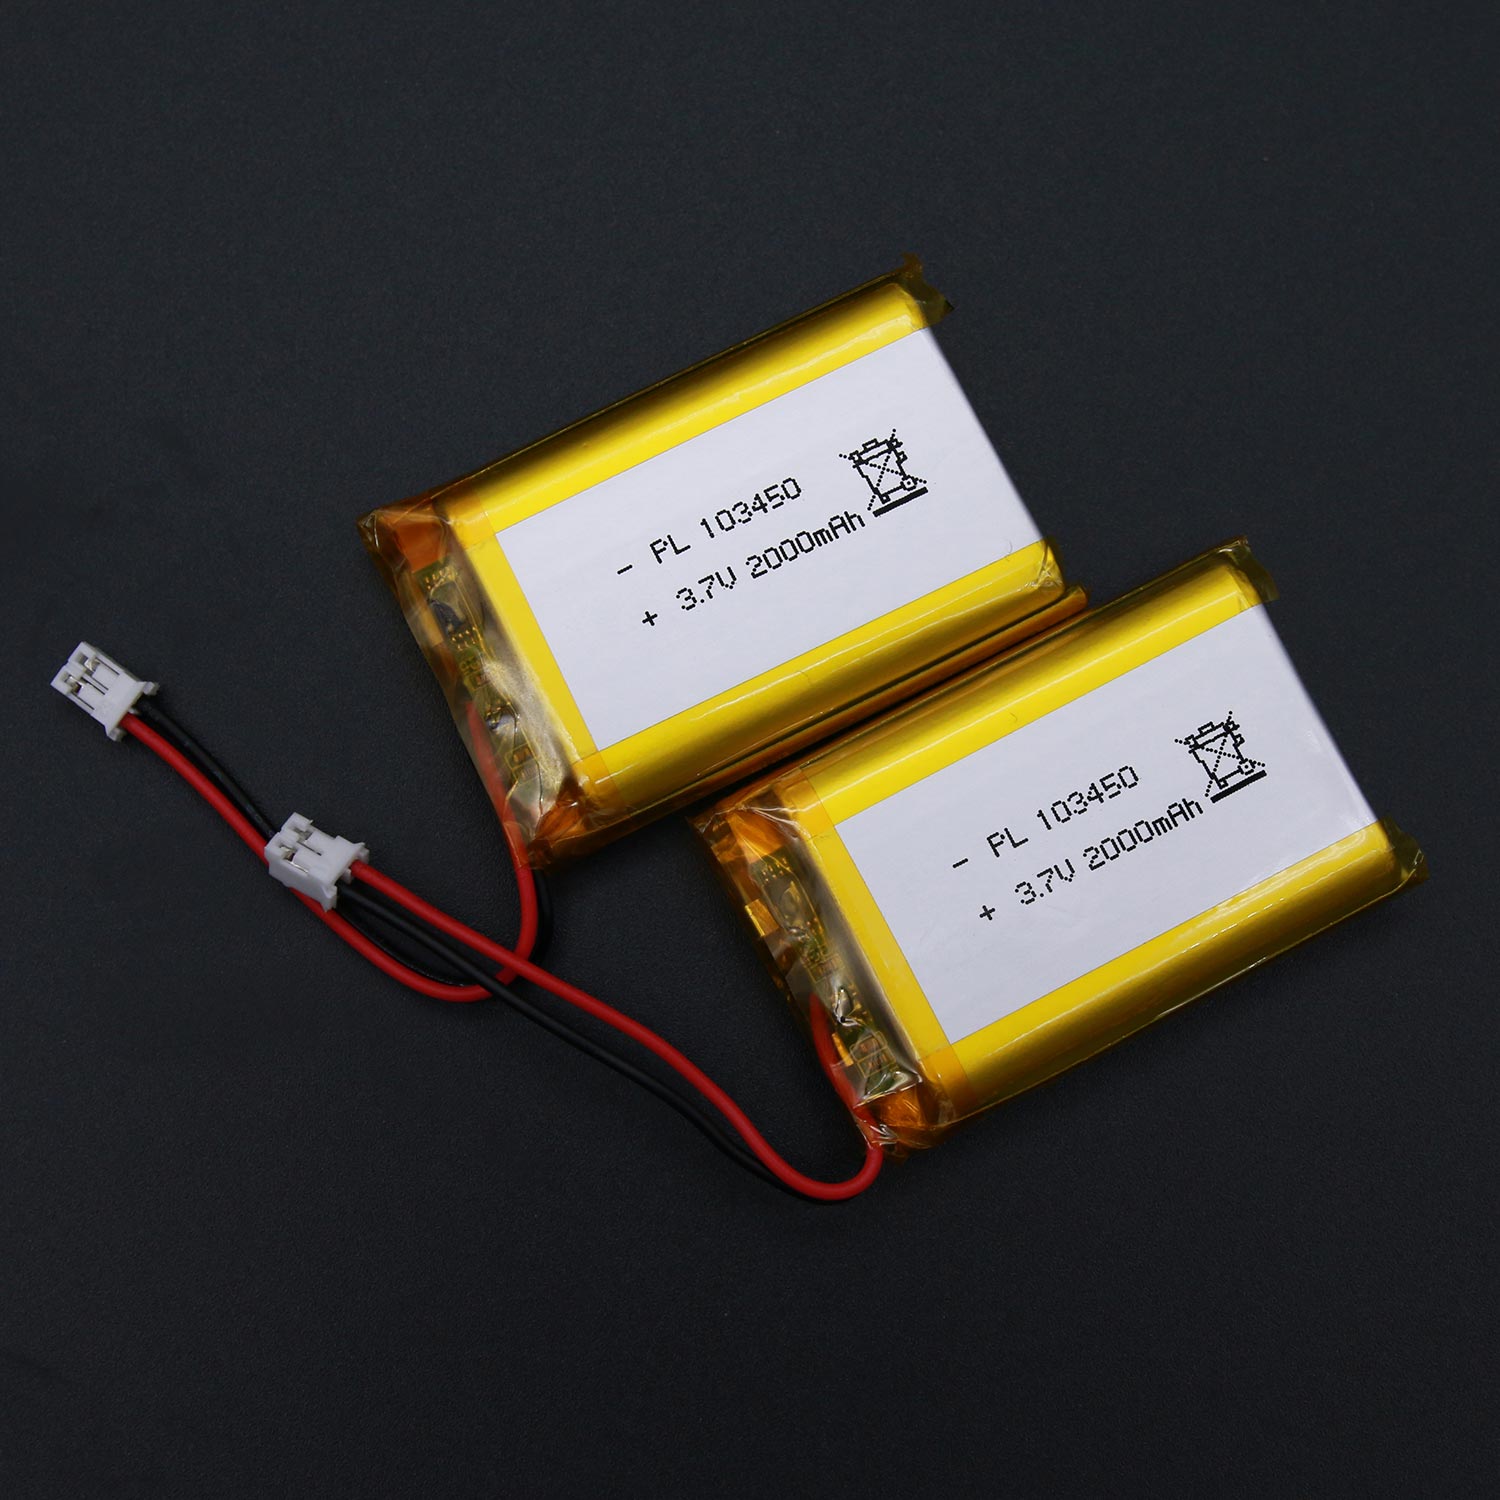 Batterie lithium polymère 3.7V 2000mAh 103450